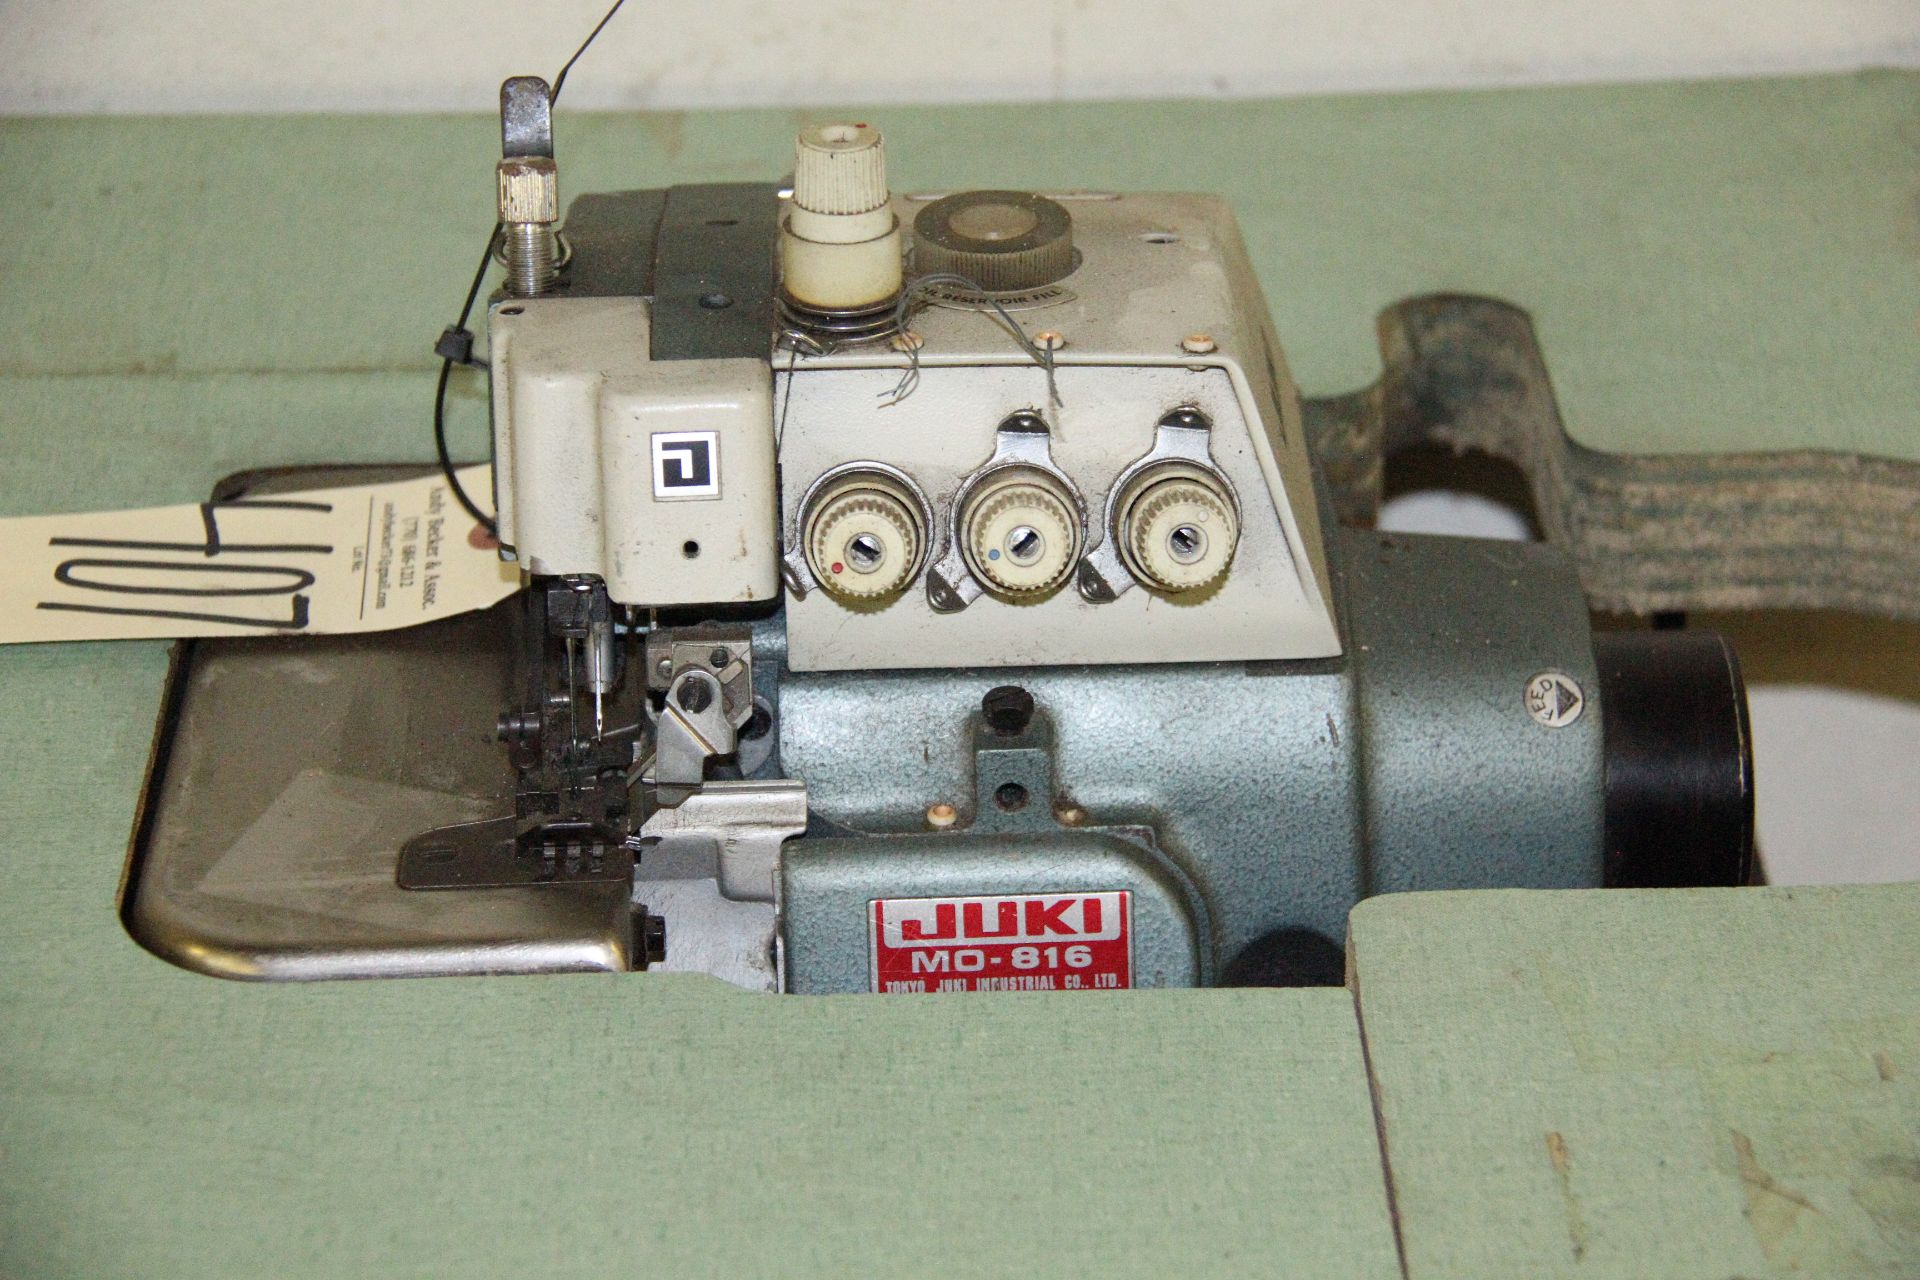 Juki MO-816 5-Thread Safety Stitch Sewing Machine - Image 3 of 4